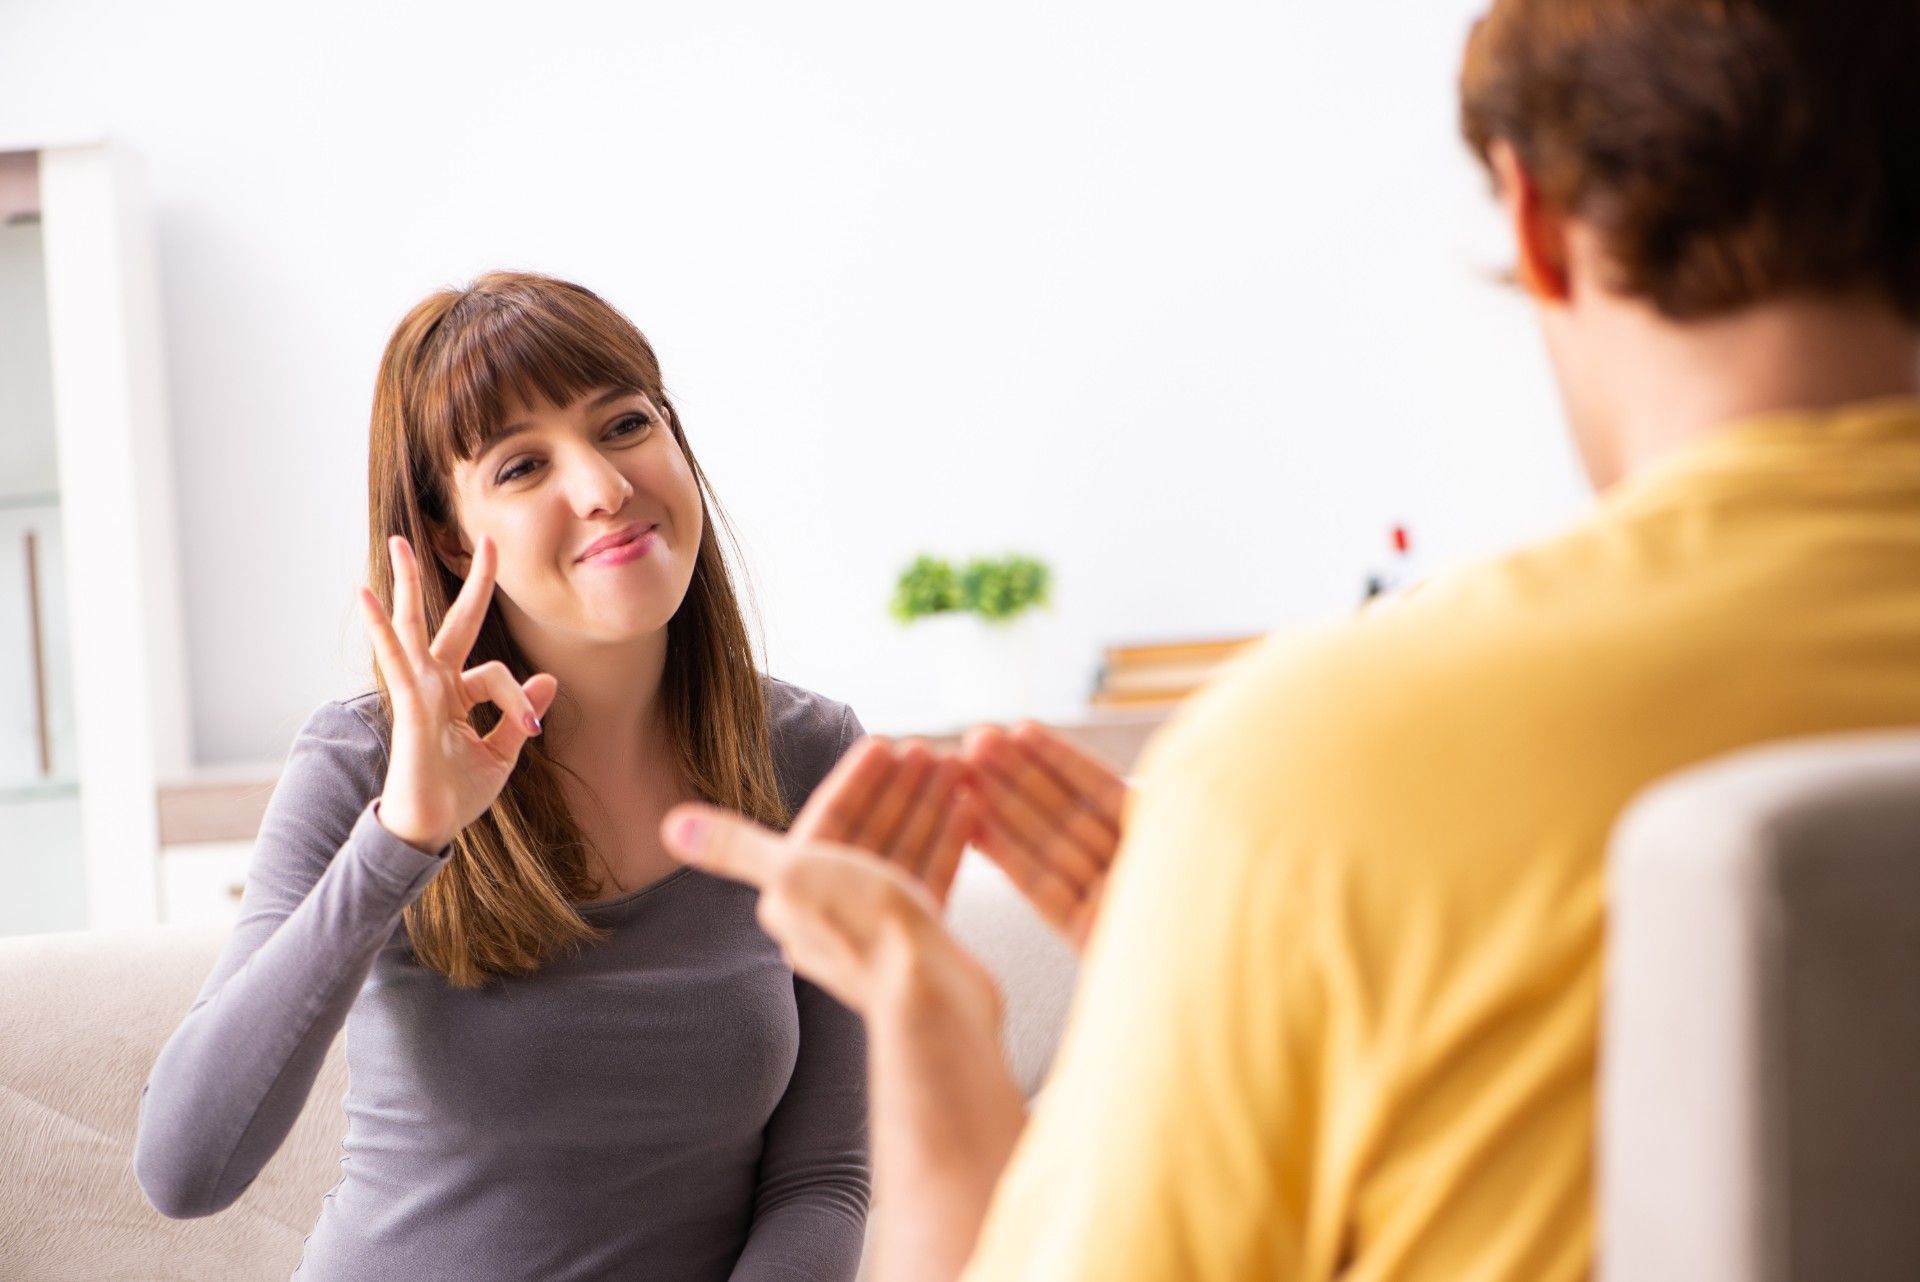 Smiling woman studies American Sign Language with a partner - ASL interpreter